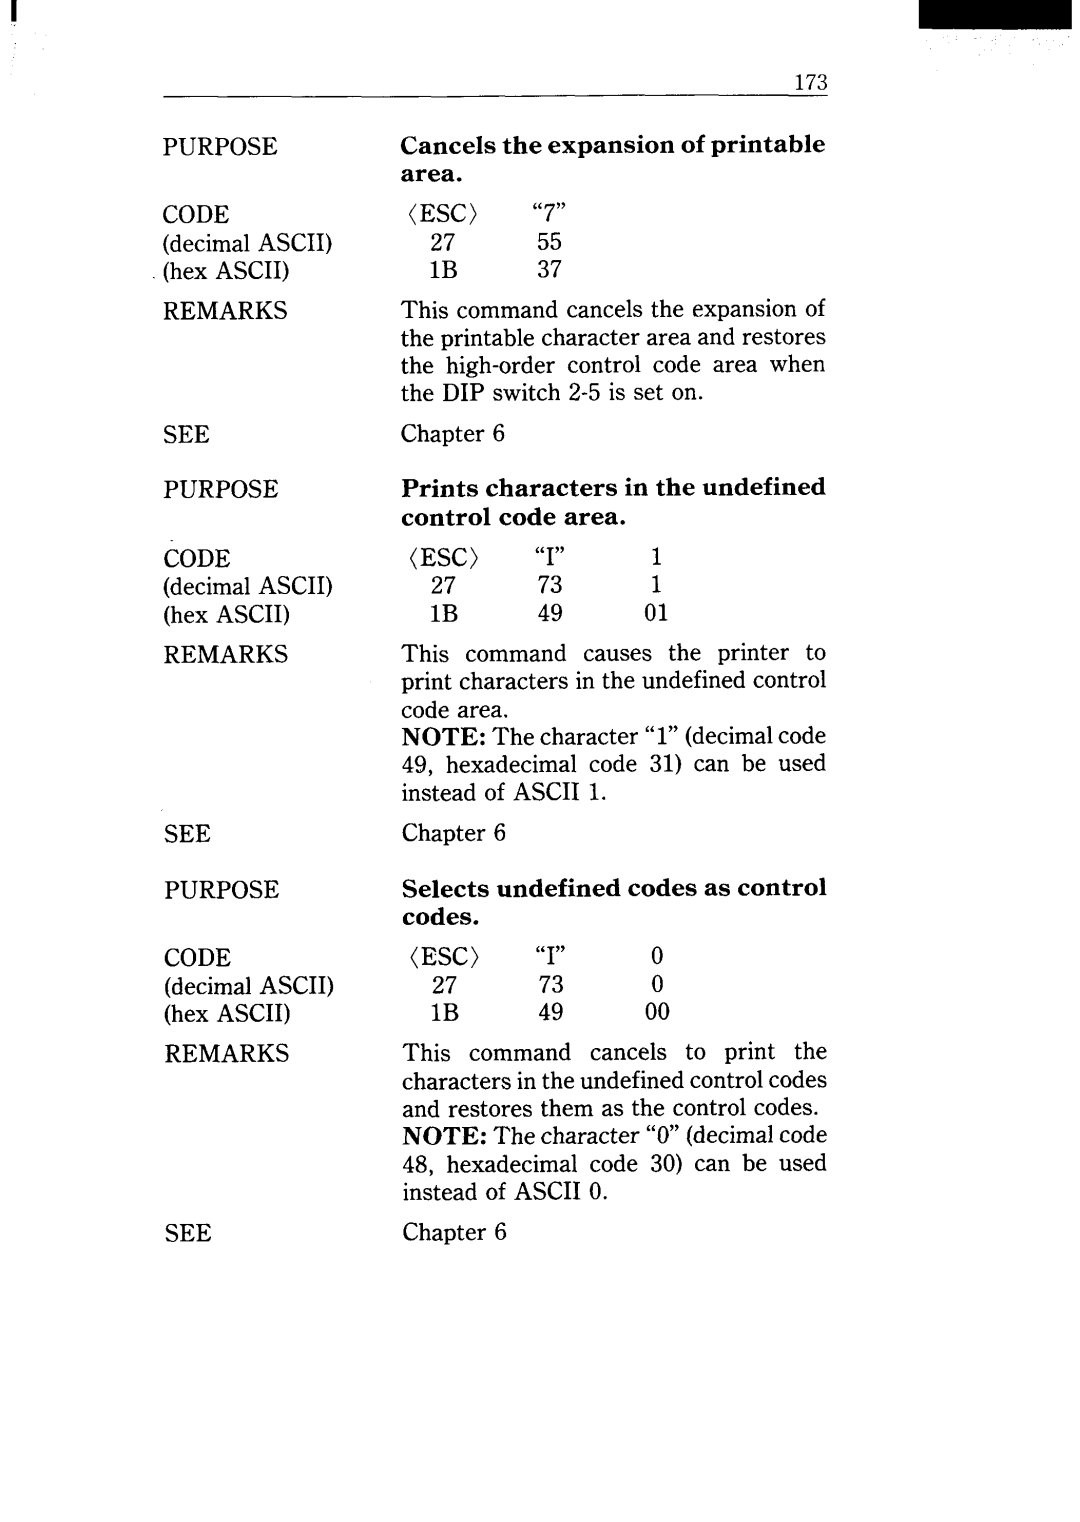 Star Micronics NX-15 user manual PURPOSE CODE decimal ASCII hex ASCII REMARKS SEE PURPOSE tiODE 